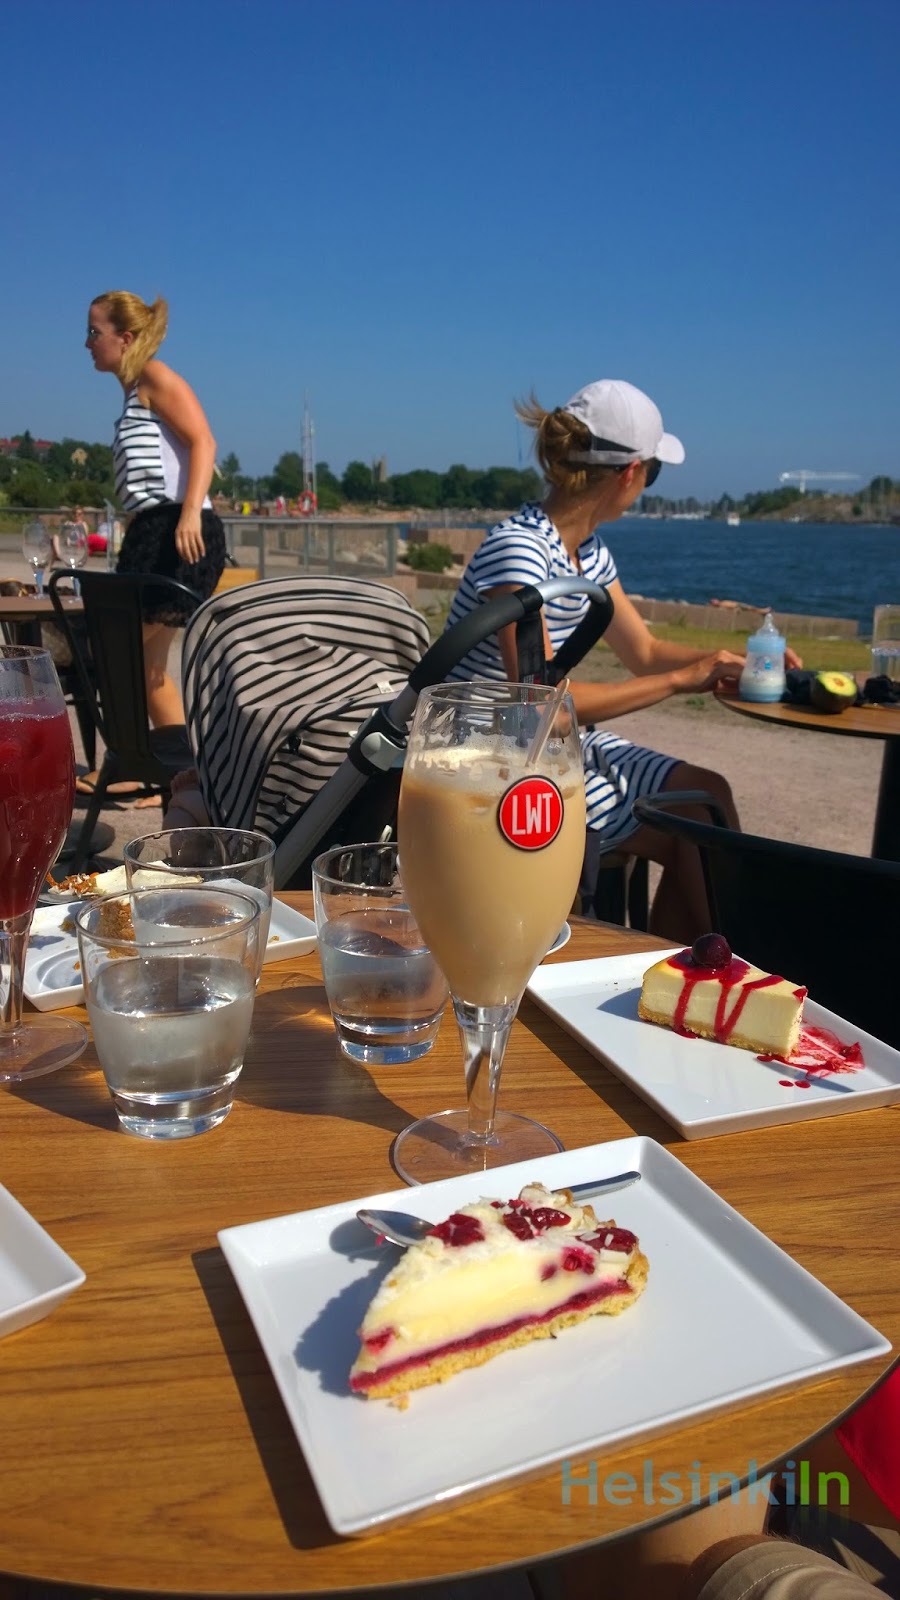 Iced latte and cake at Birgitta